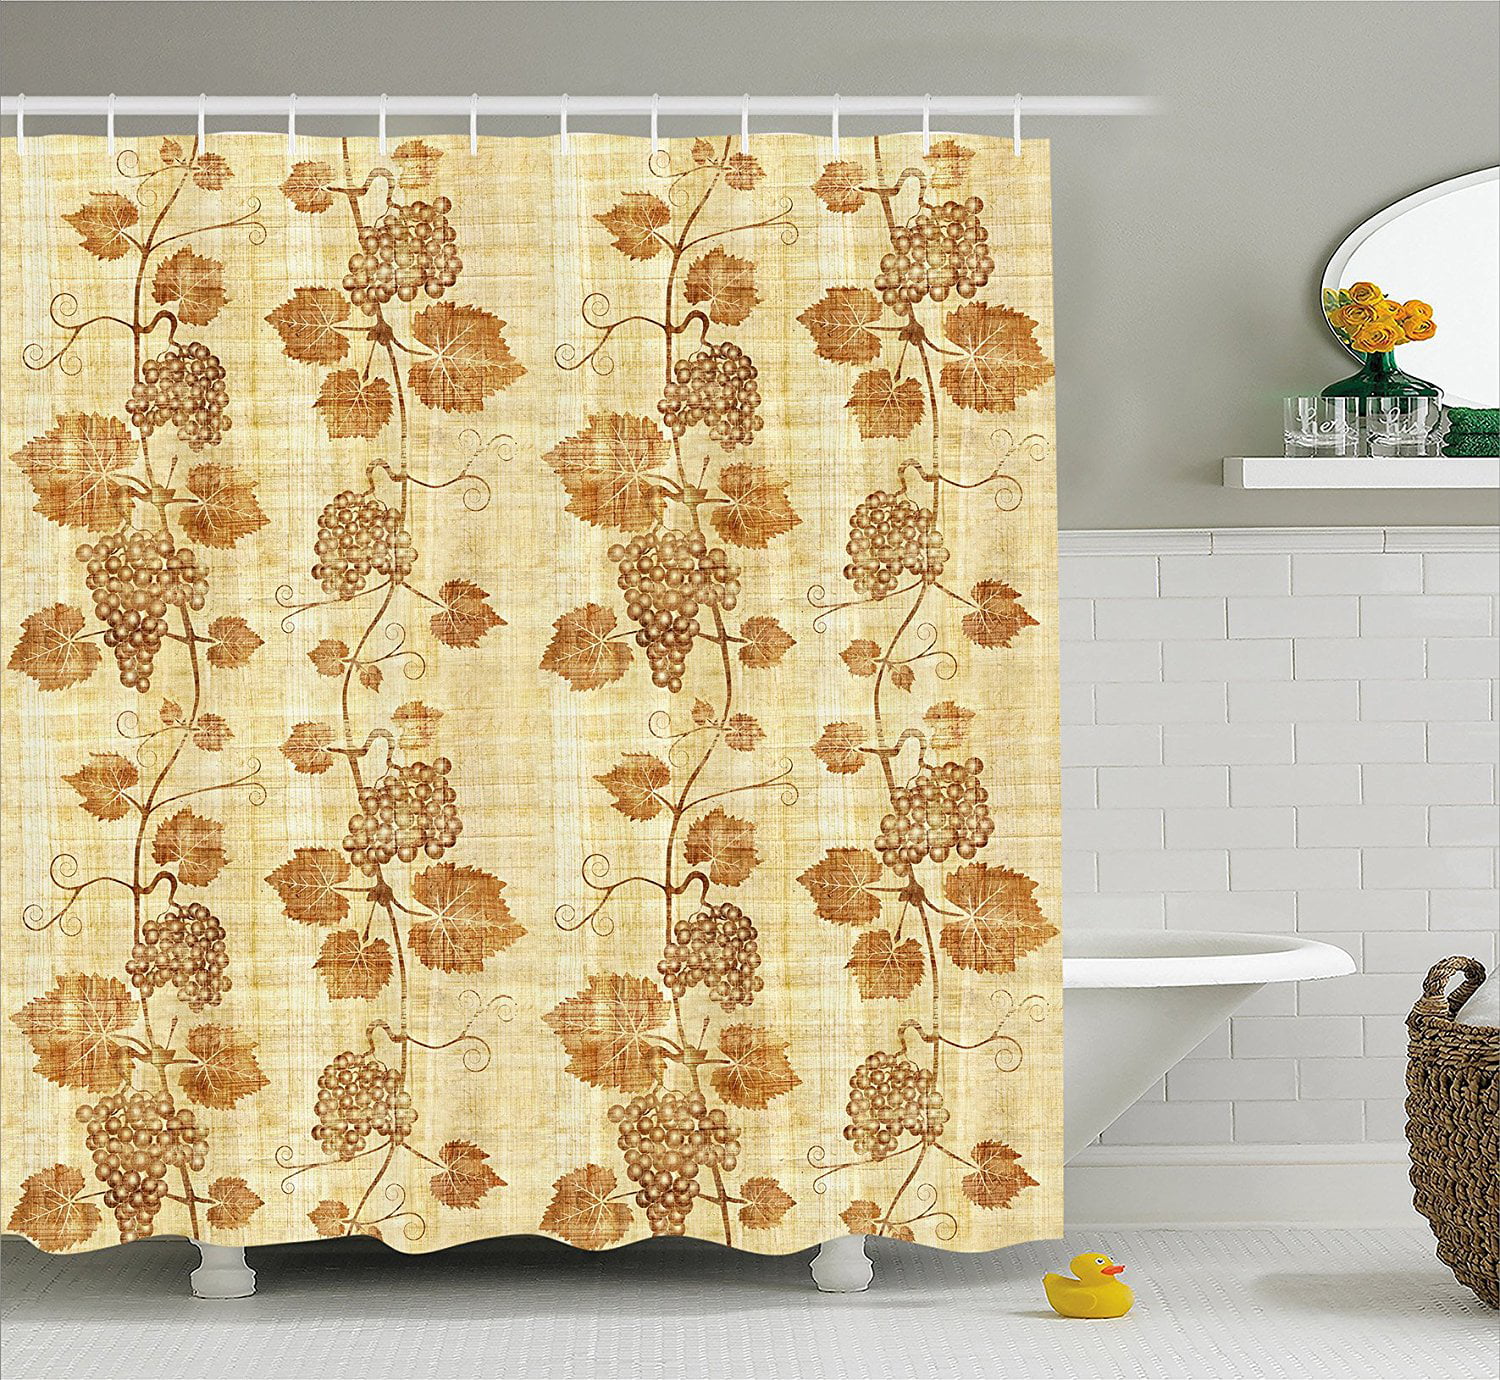 Ancient Egyptian Girl Shower Curtain Liner Waterproof Fabric Bathroom Mat Hooks 